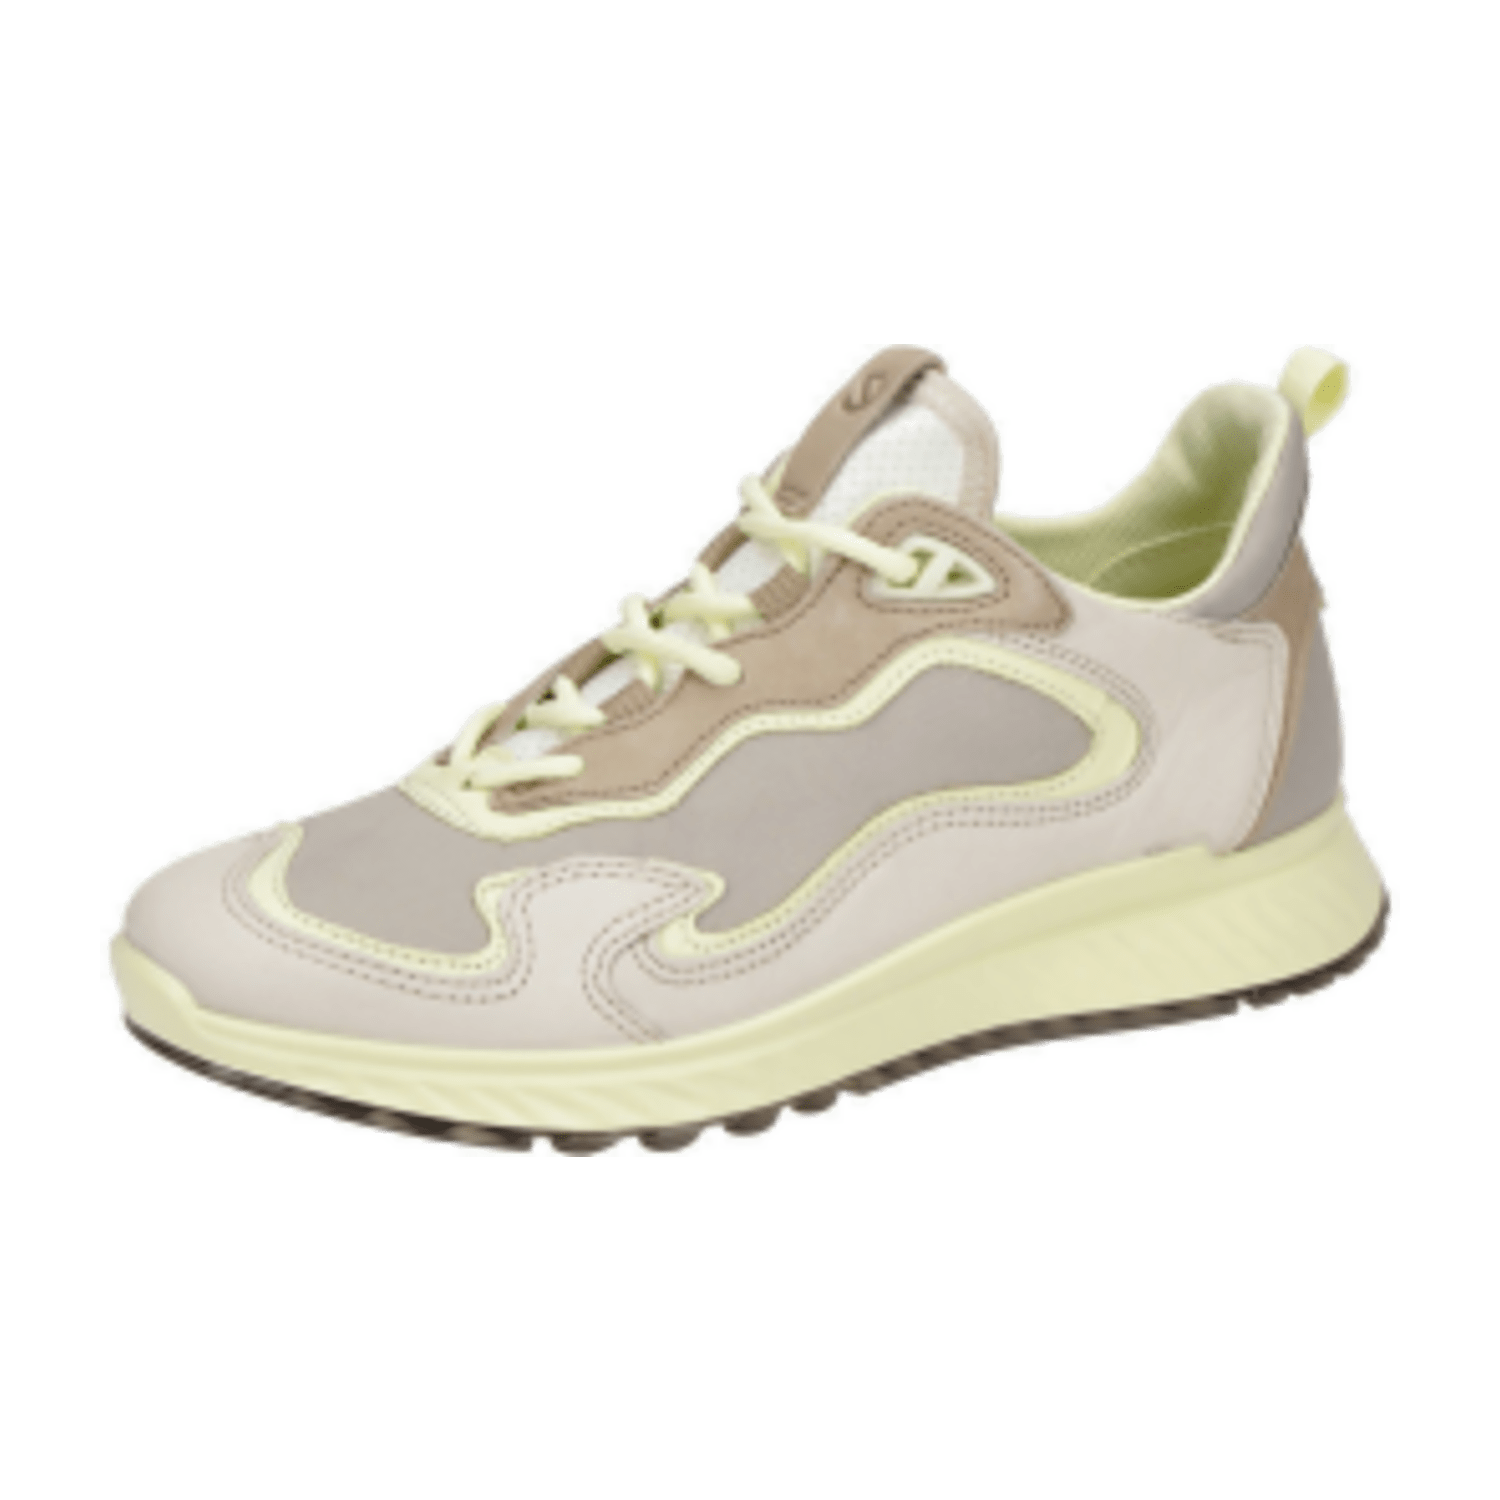 Ecco ST.1 Schuhe Sneaker gelb grau 837843